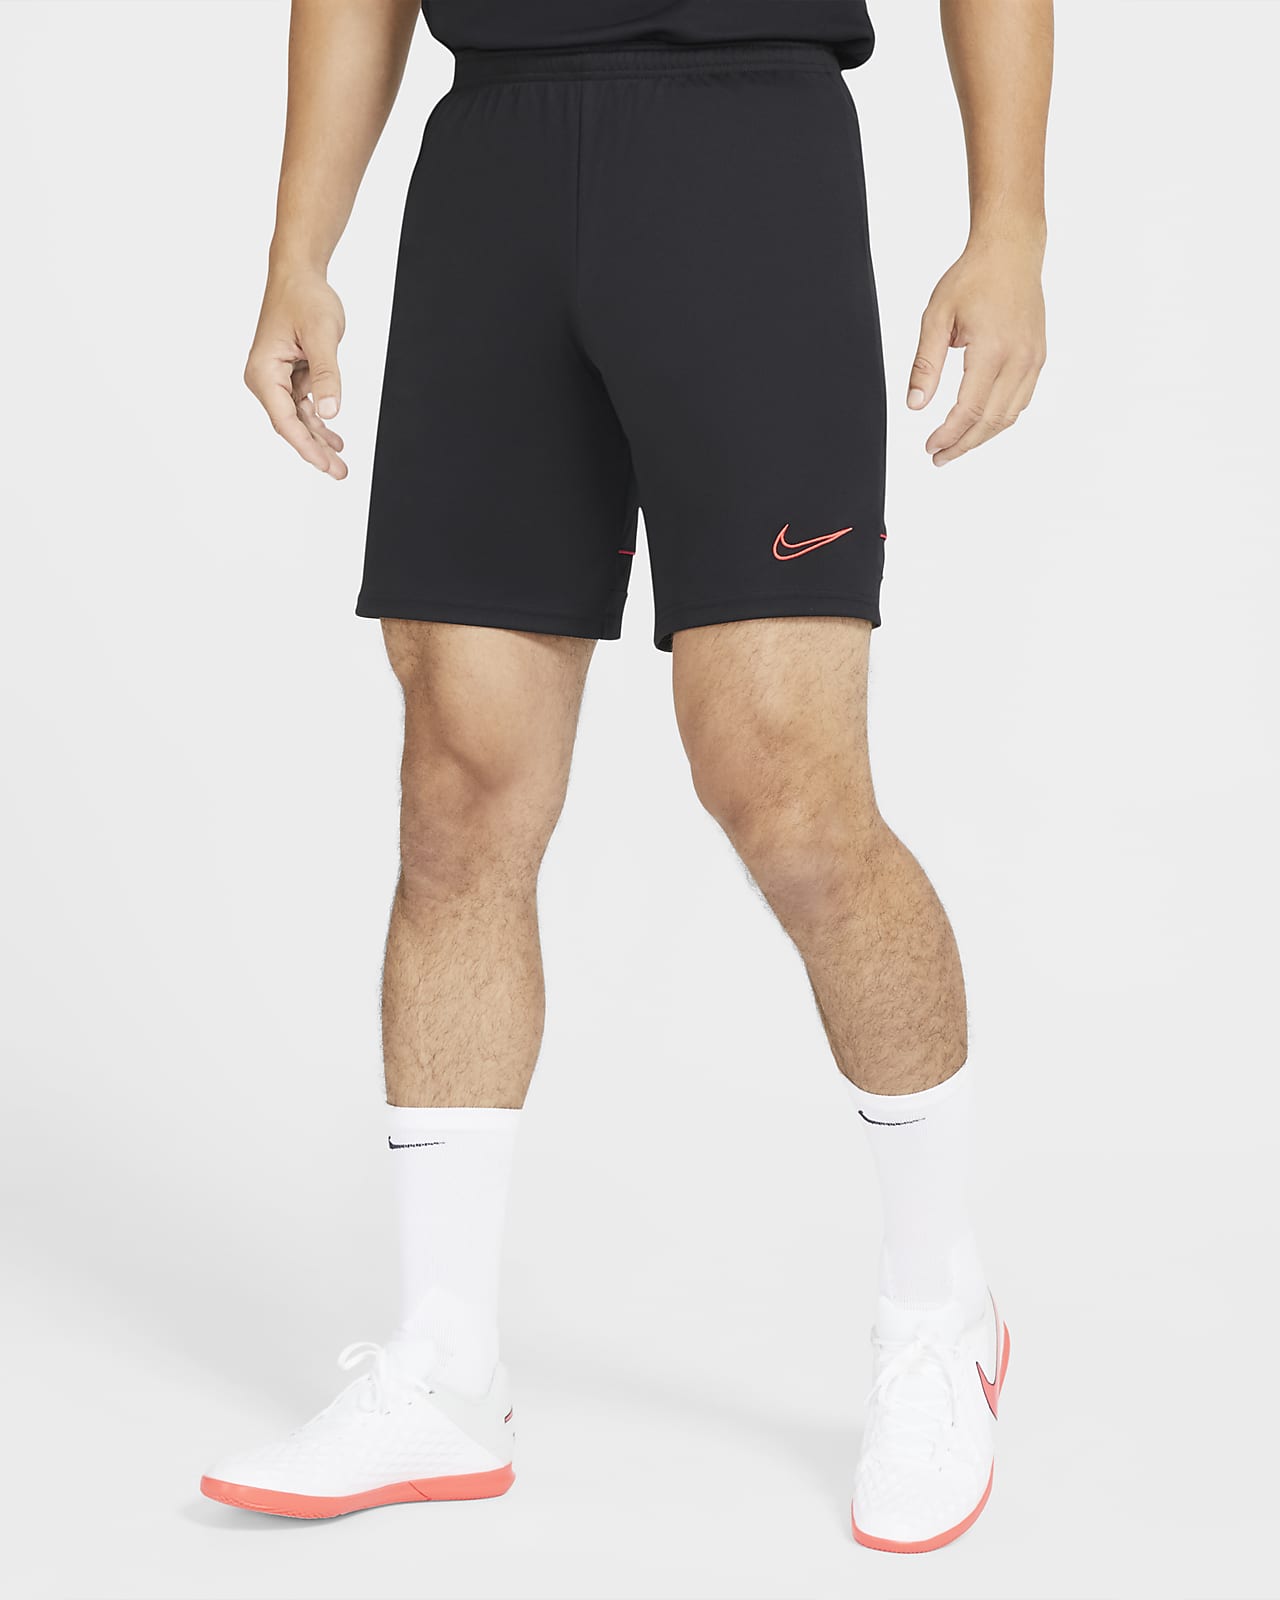 white nike soccer shorts